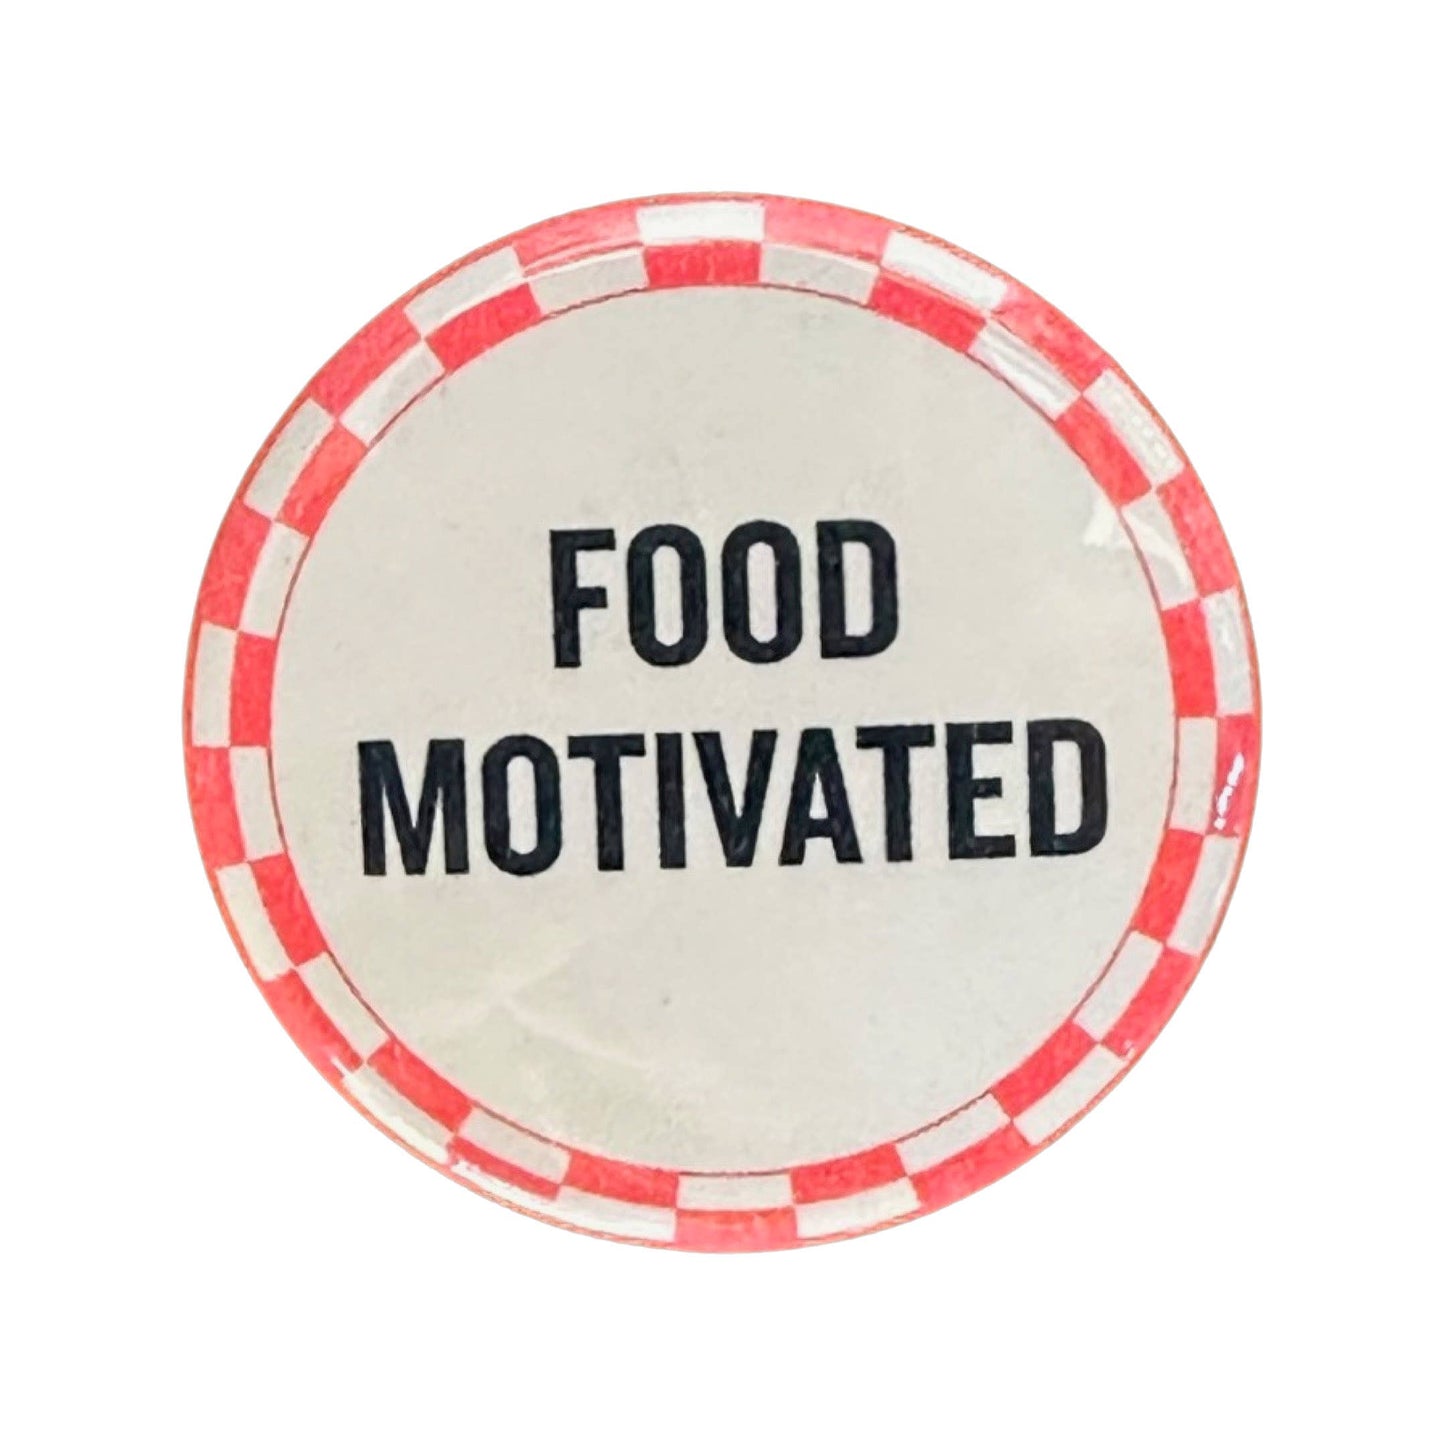 World Famous Original - Food Motivated Button